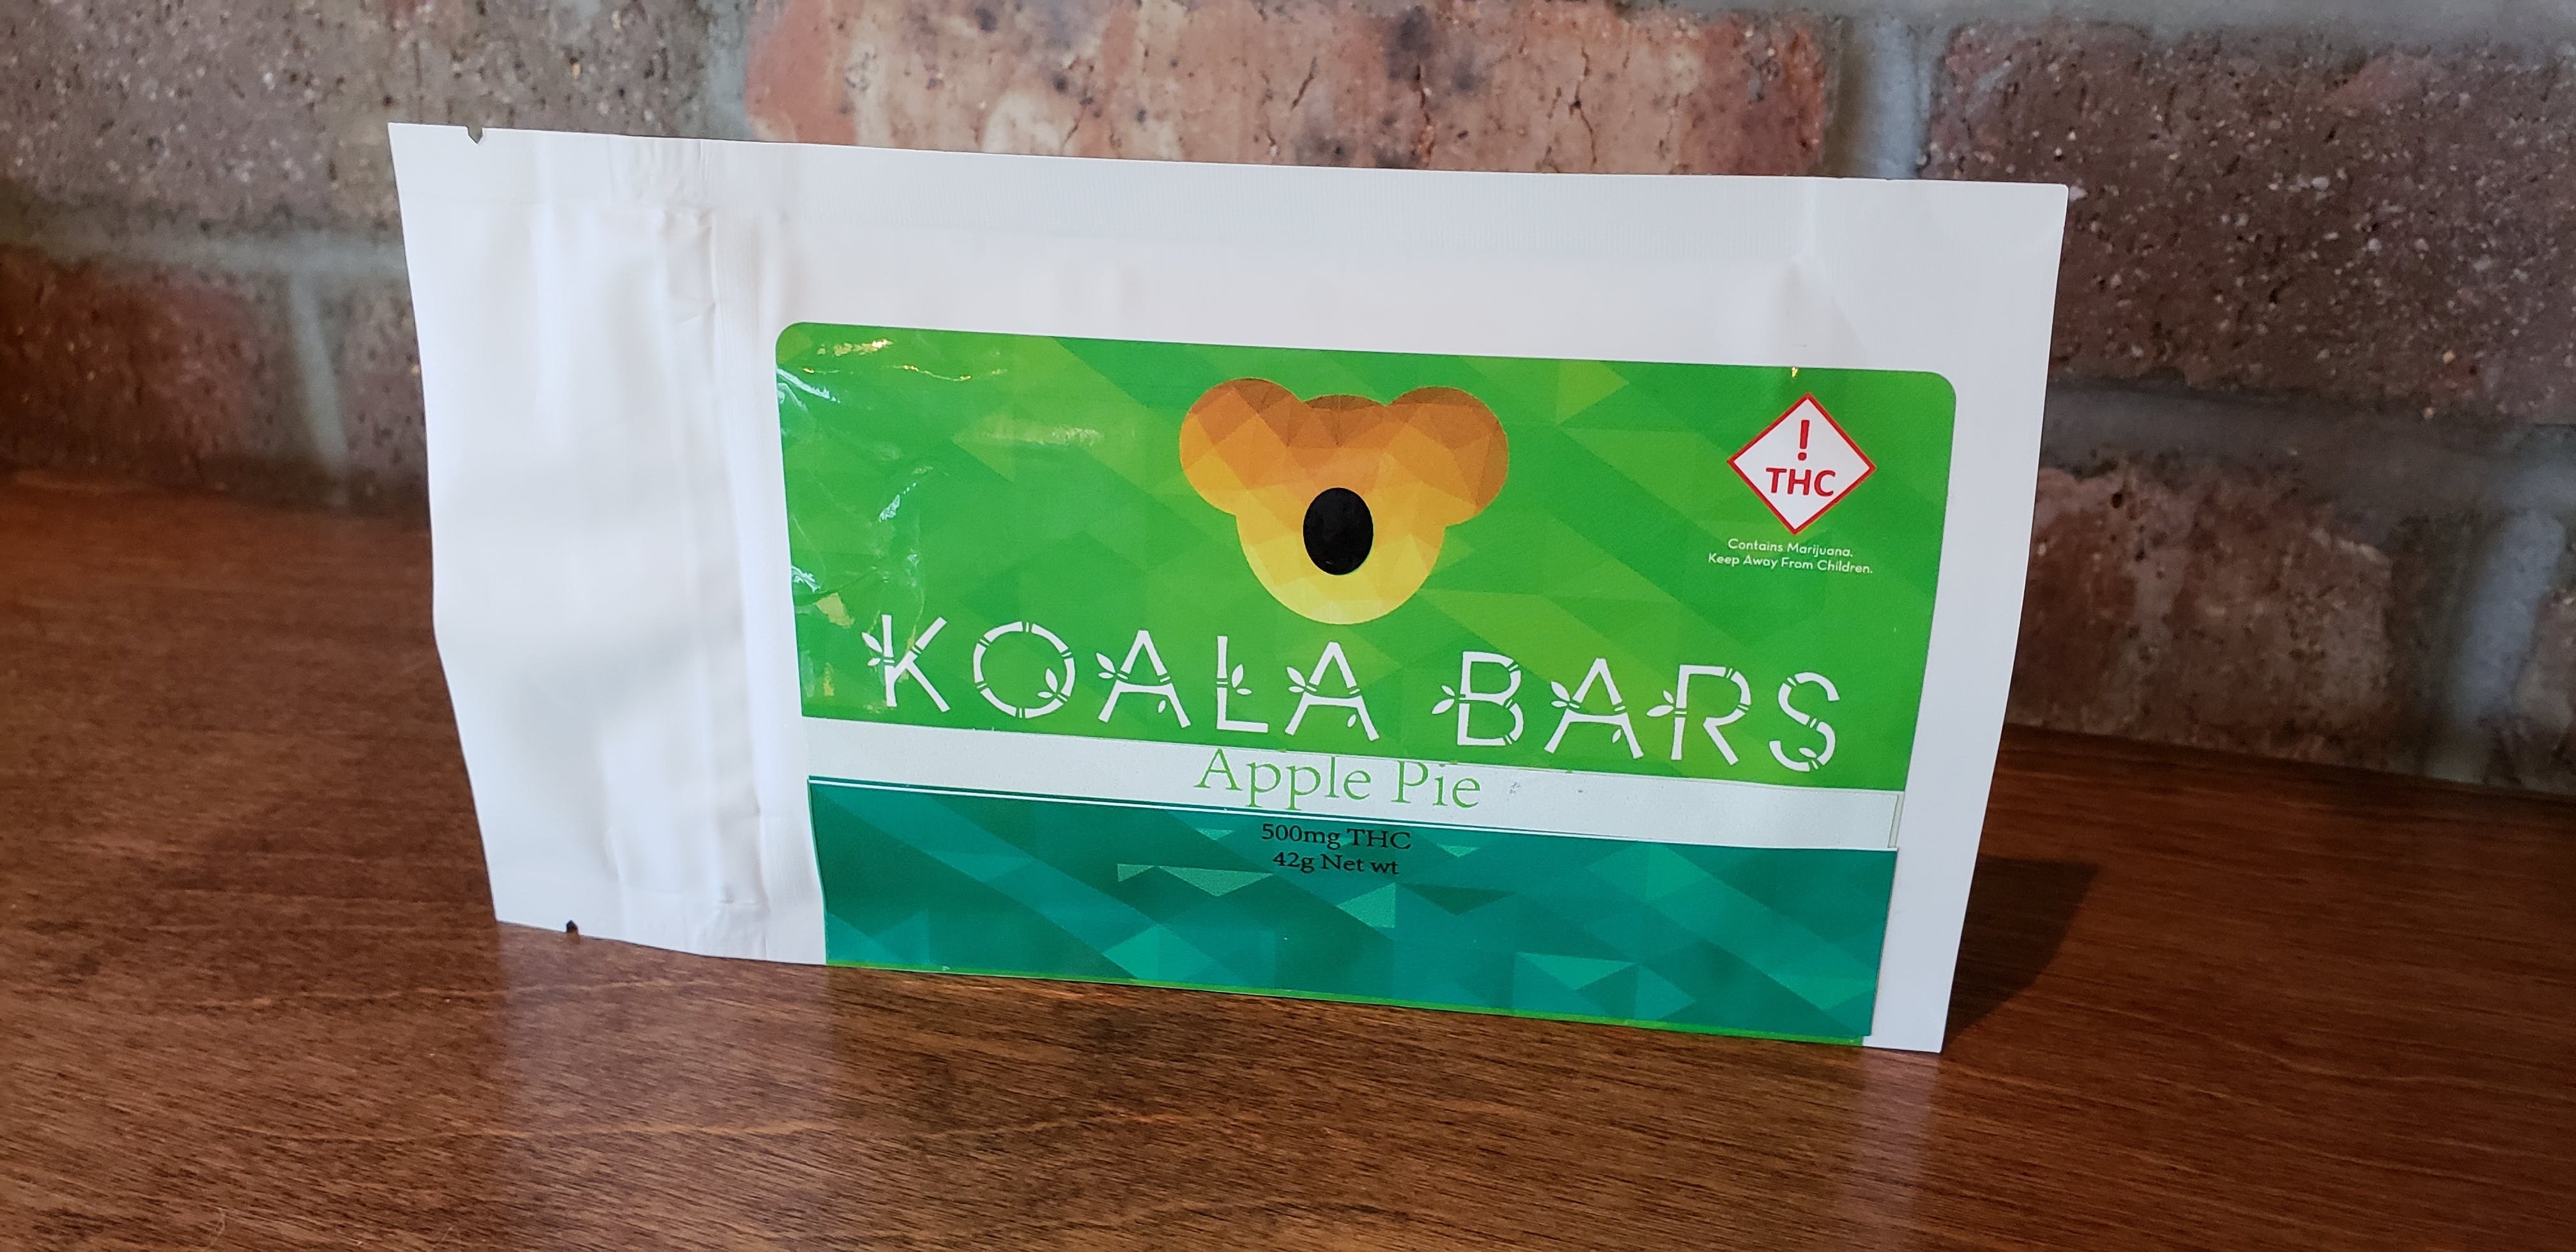 edible-250mg-2c-500mg-a-1000mg-apple-pie-koala-bar